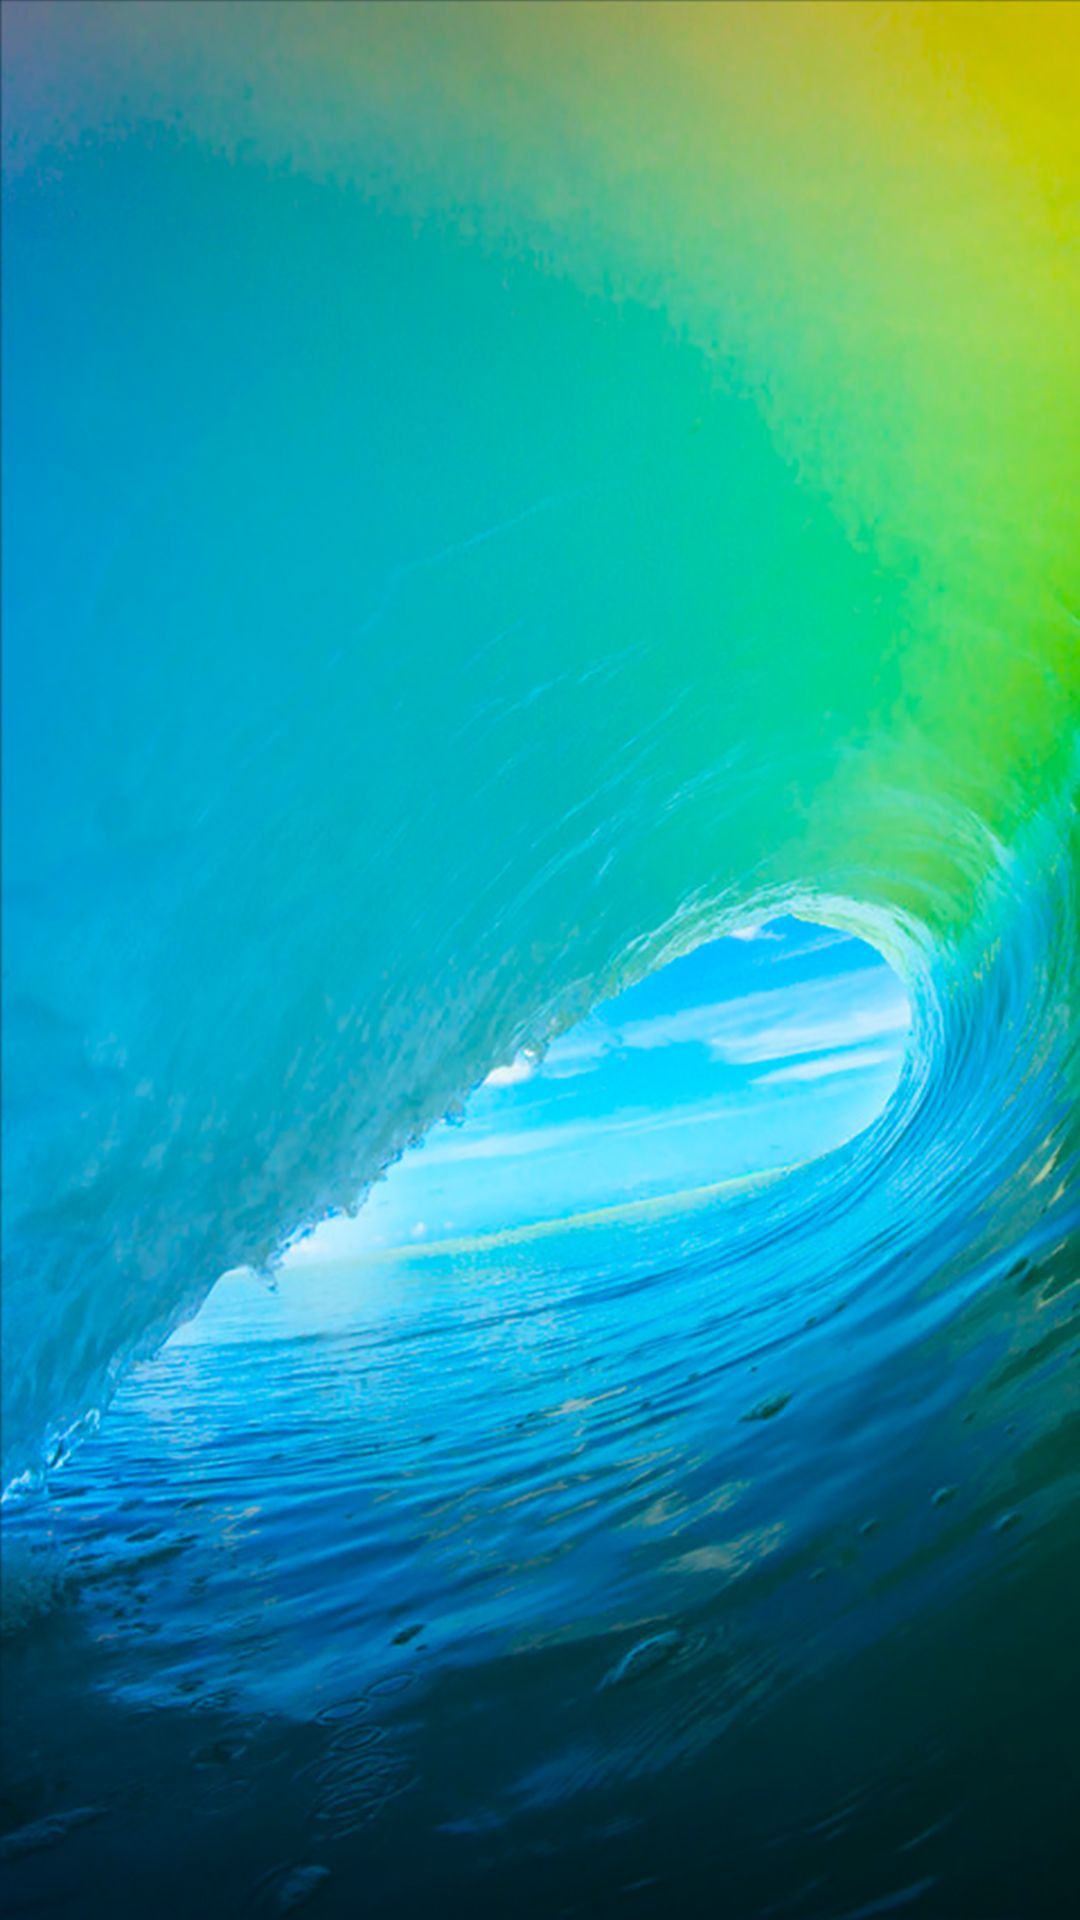 Pure Bright Cyan Ocean Surging Wave Pattern iOS9 Wallpaper #iPhone # wallpaper. Beautiful wallpaper hd, iPhone wallpaper for guys, iPhone 6s wallpaper